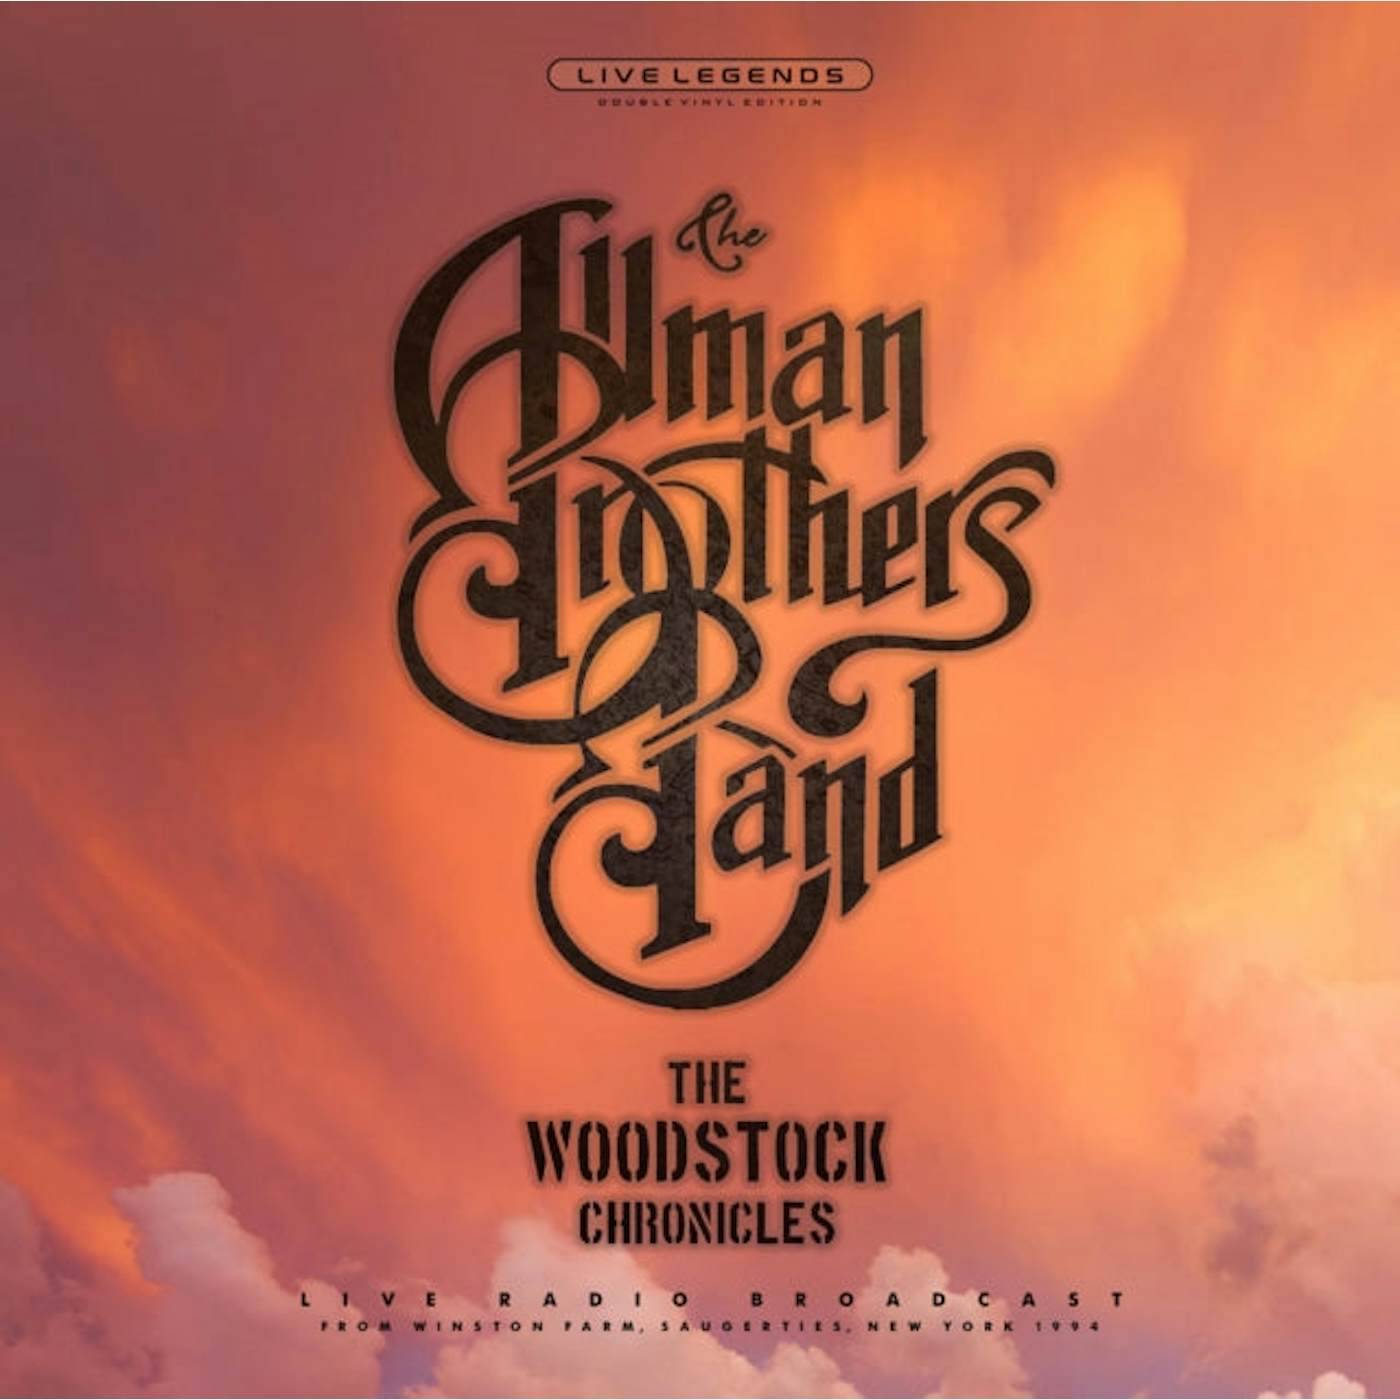 Allman Brothers Band LP Vinyl Record - The Woodstock Chronicles (Crystal Vinyl)